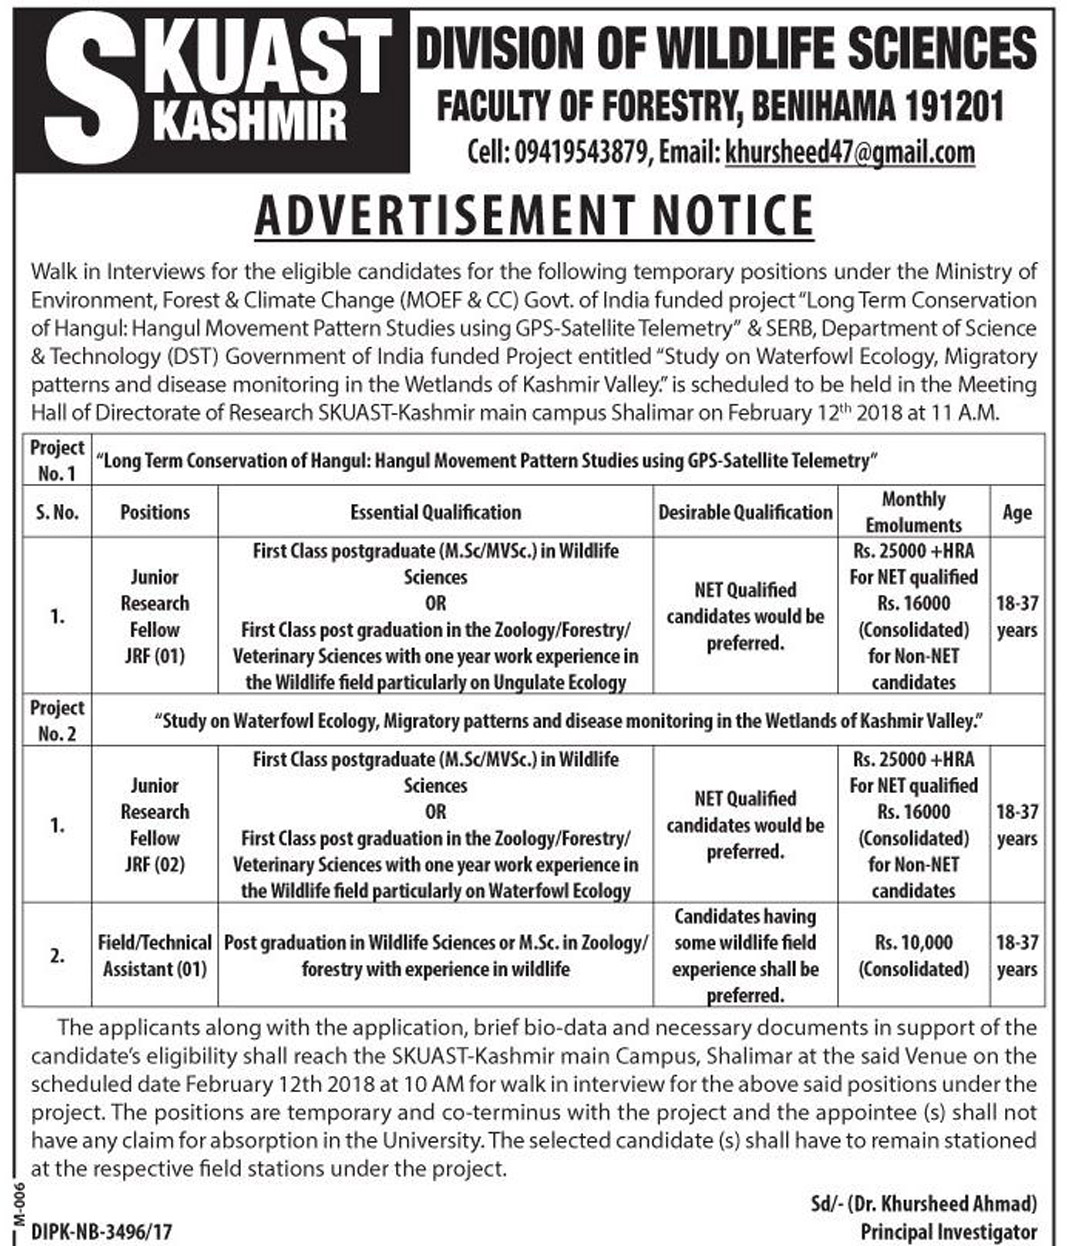 Job opportunities at SKUAST Kashmir